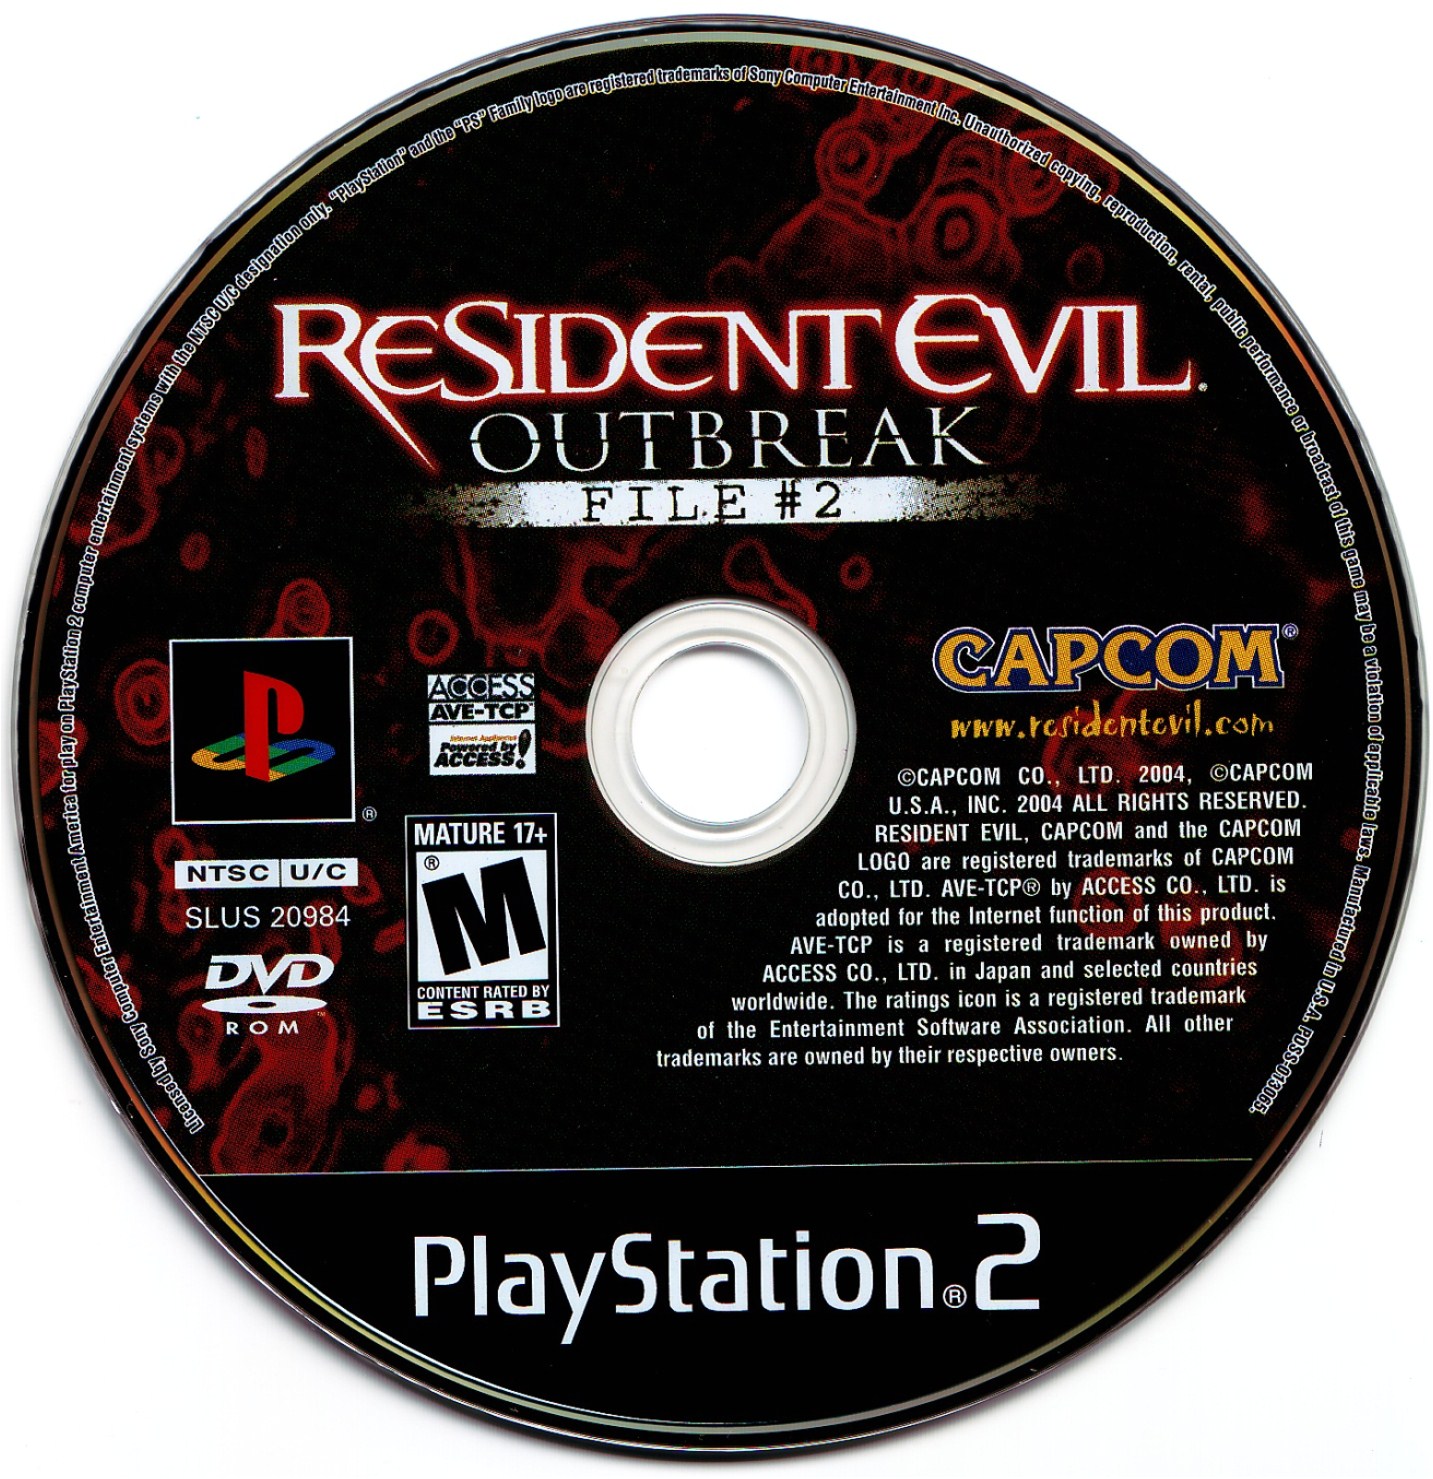 Resident Evil Outbreak: File #2 HD wallpapers, Desktop wallpaper - most viewed